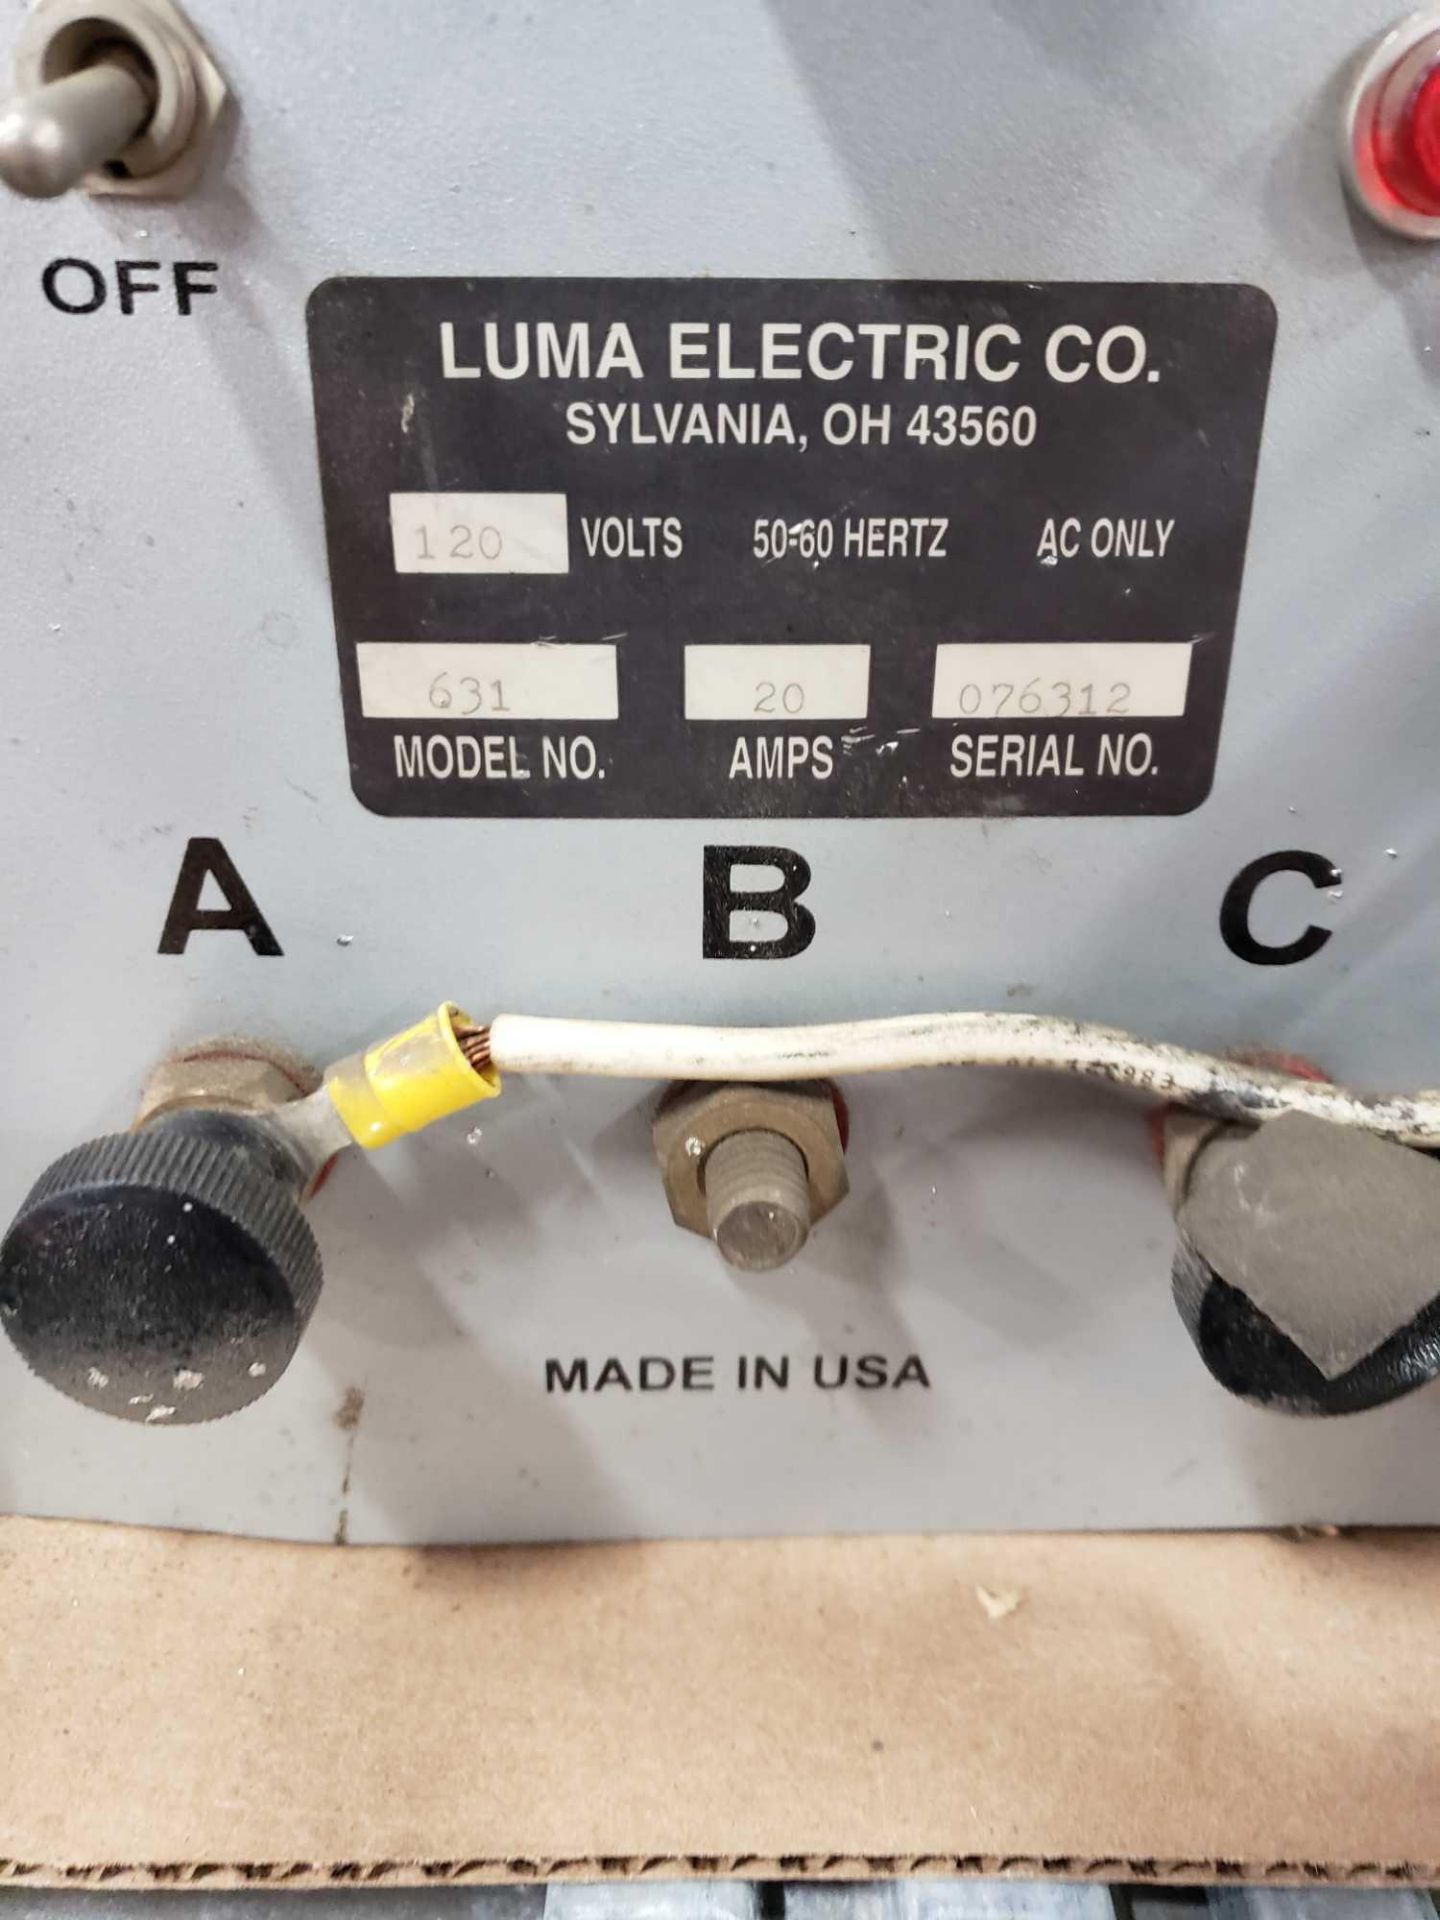 Luma Electric model 631 Soldering Tool. 120v single phase. - Image 2 of 3